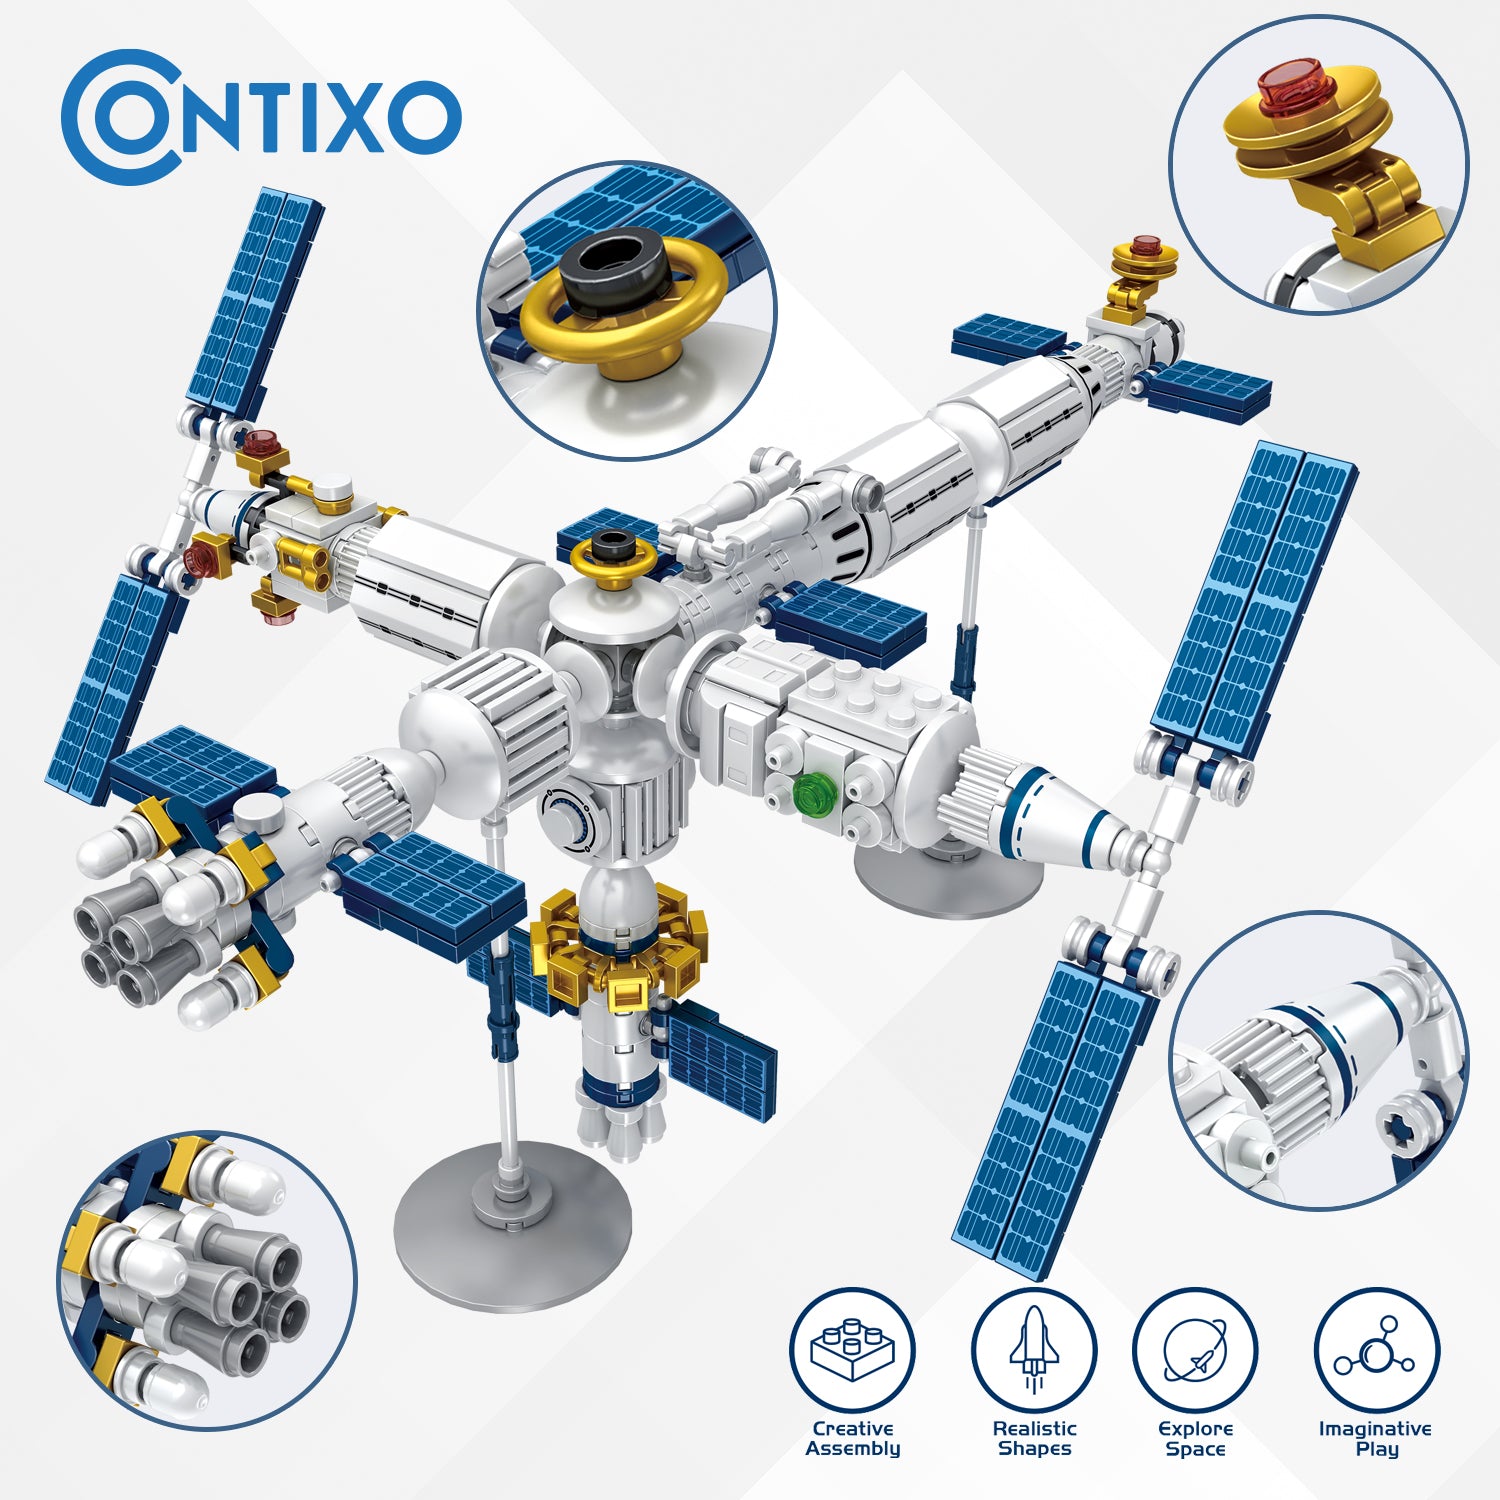 Contixo BK07 Aerospace Series Space Station Building Block Set - 573 PCS